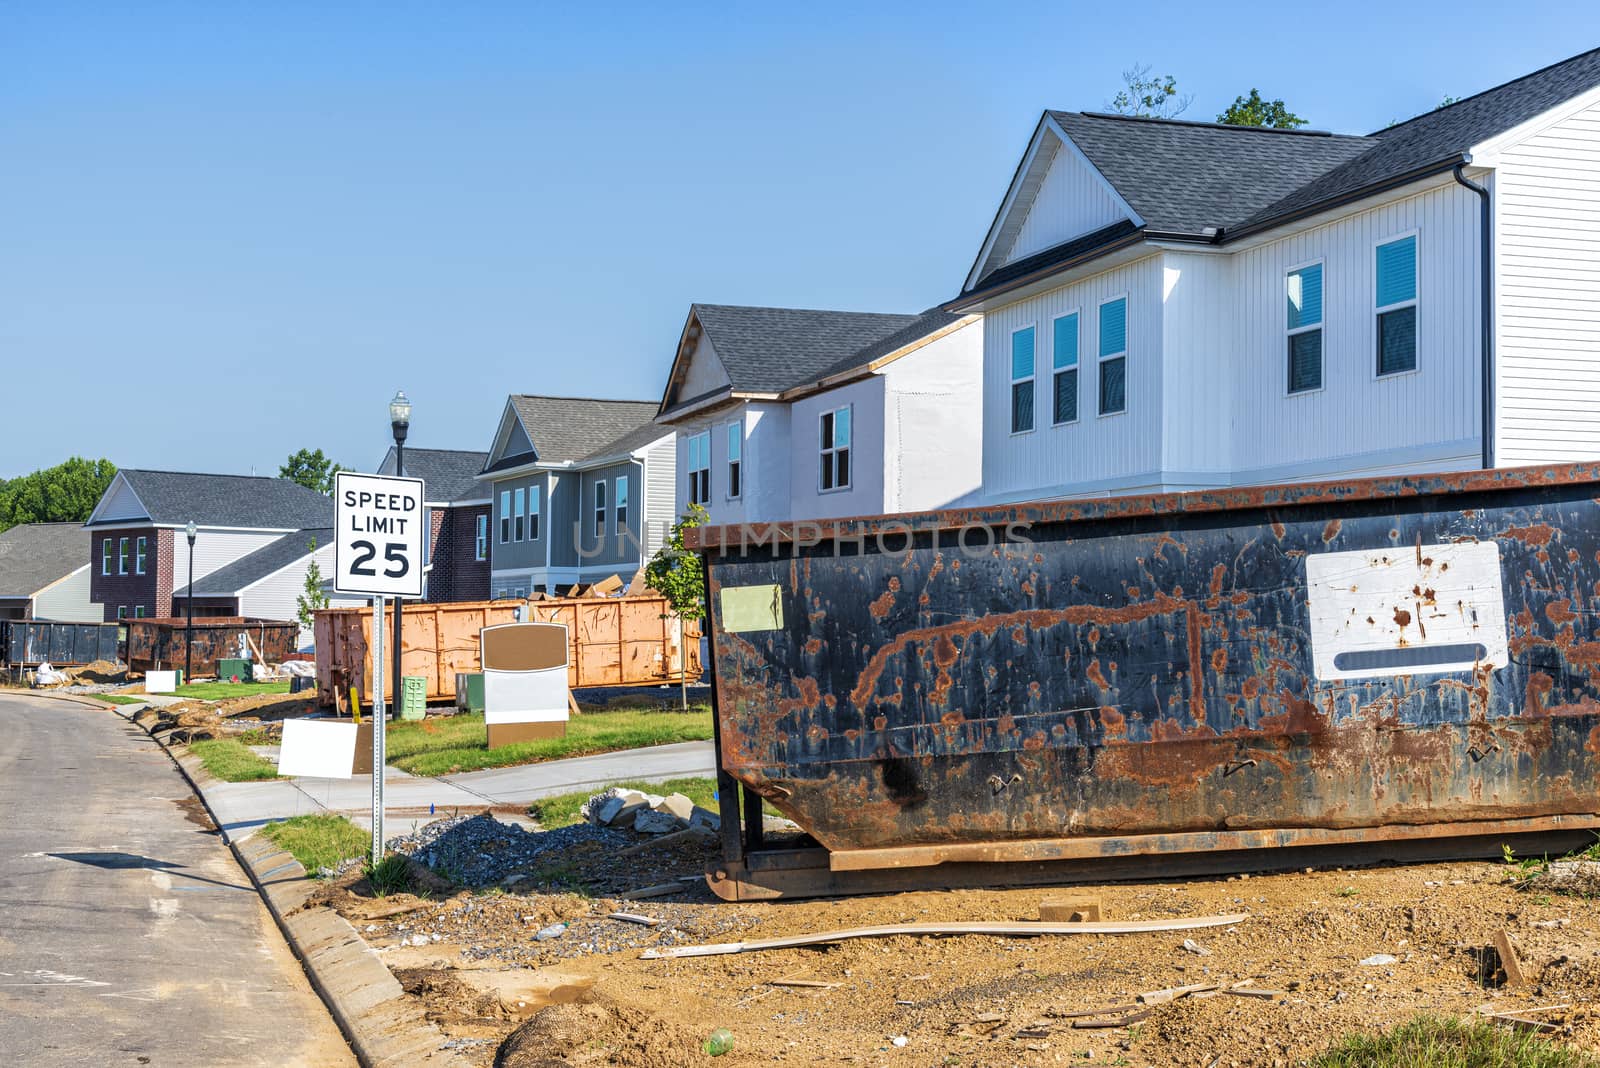 New Neighborhood Under Construction by stockbuster1